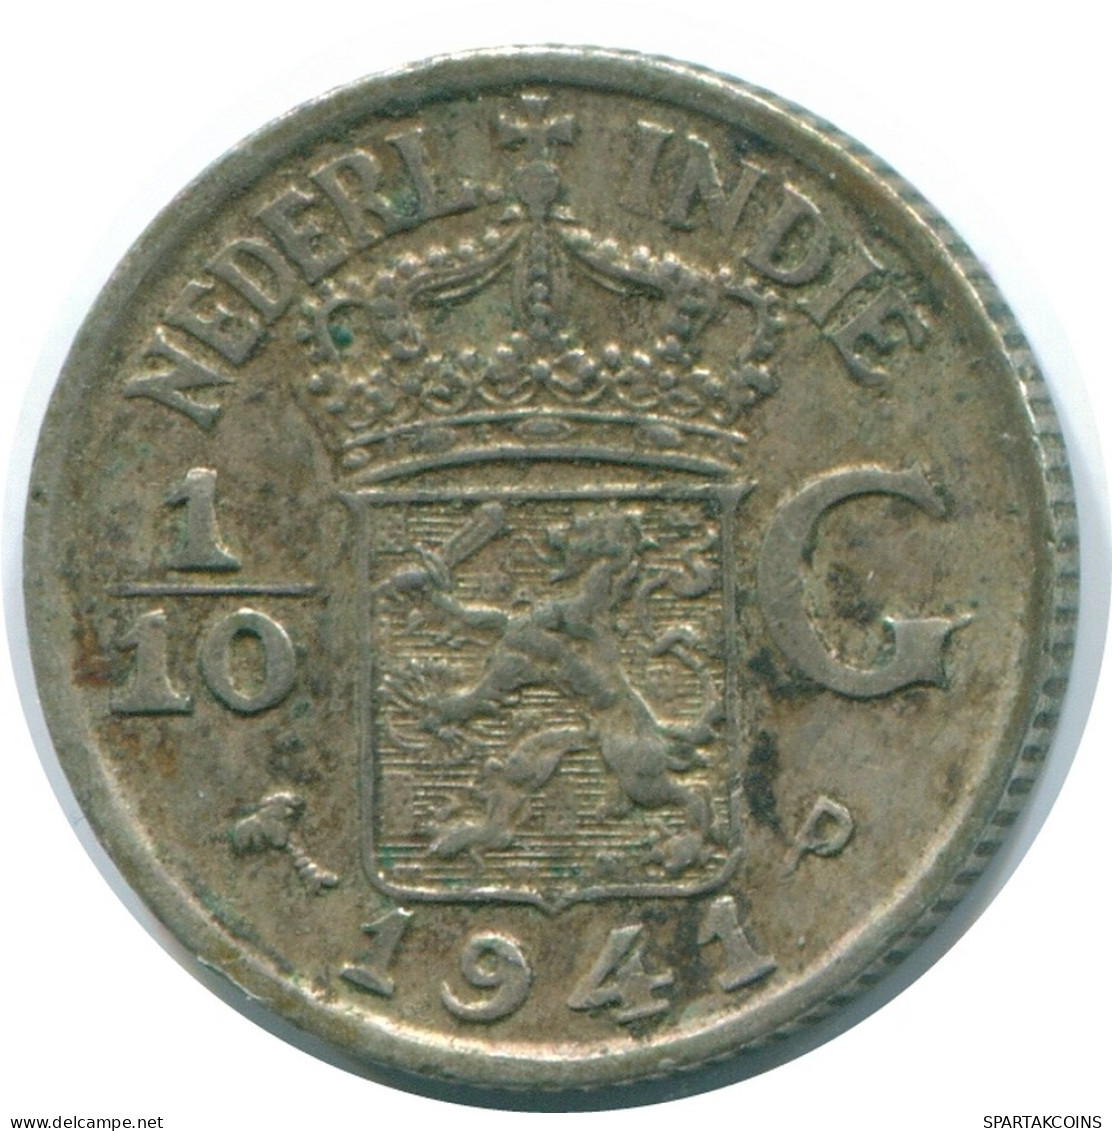 1/10 GULDEN 1941 P NETHERLANDS EAST INDIES SILVER Colonial Coin #NL13827.3.U - Indes Néerlandaises